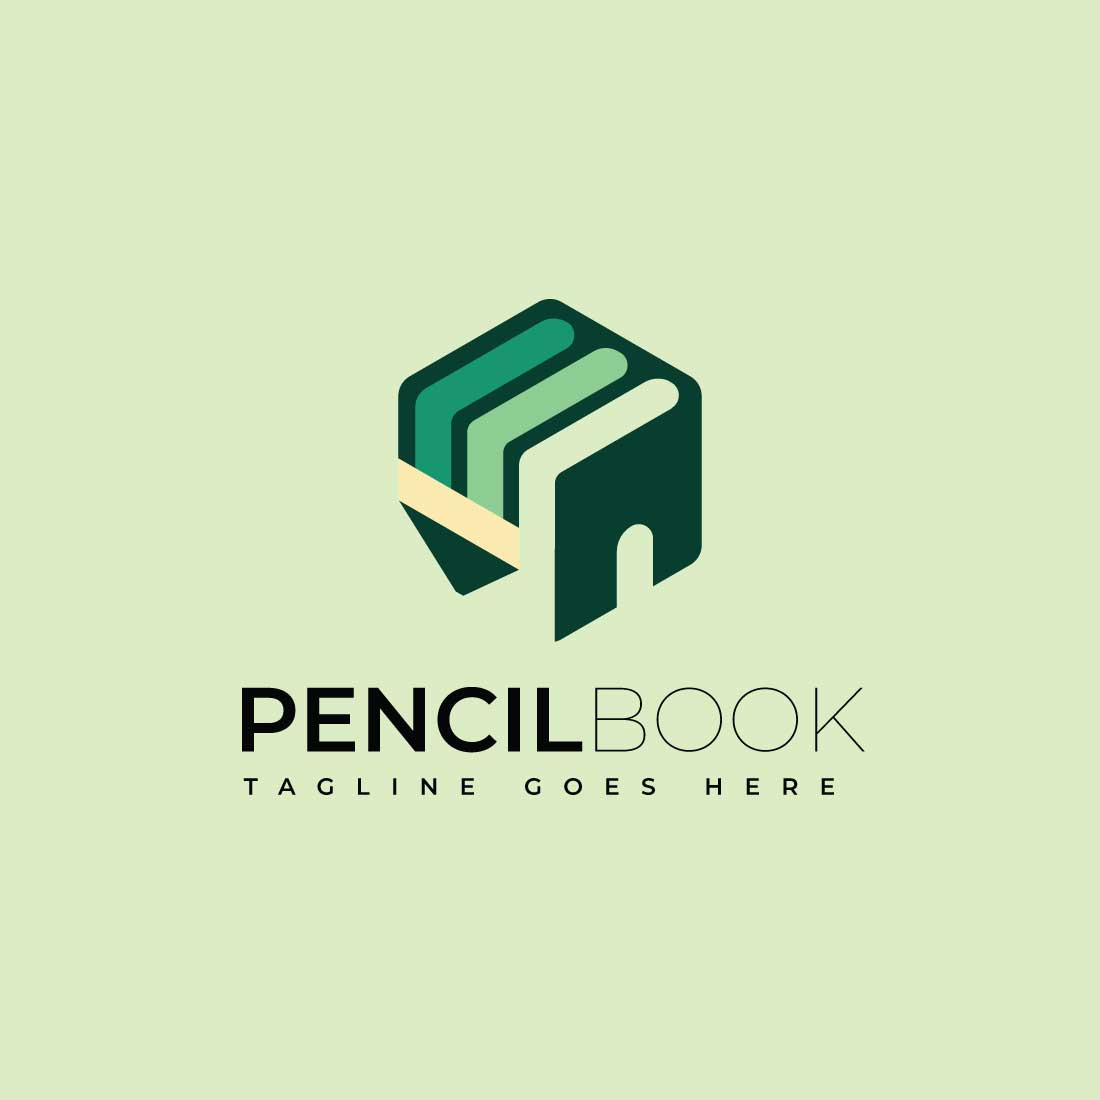 Hexagon Pencil Book Education Architecture Logo design preview image.